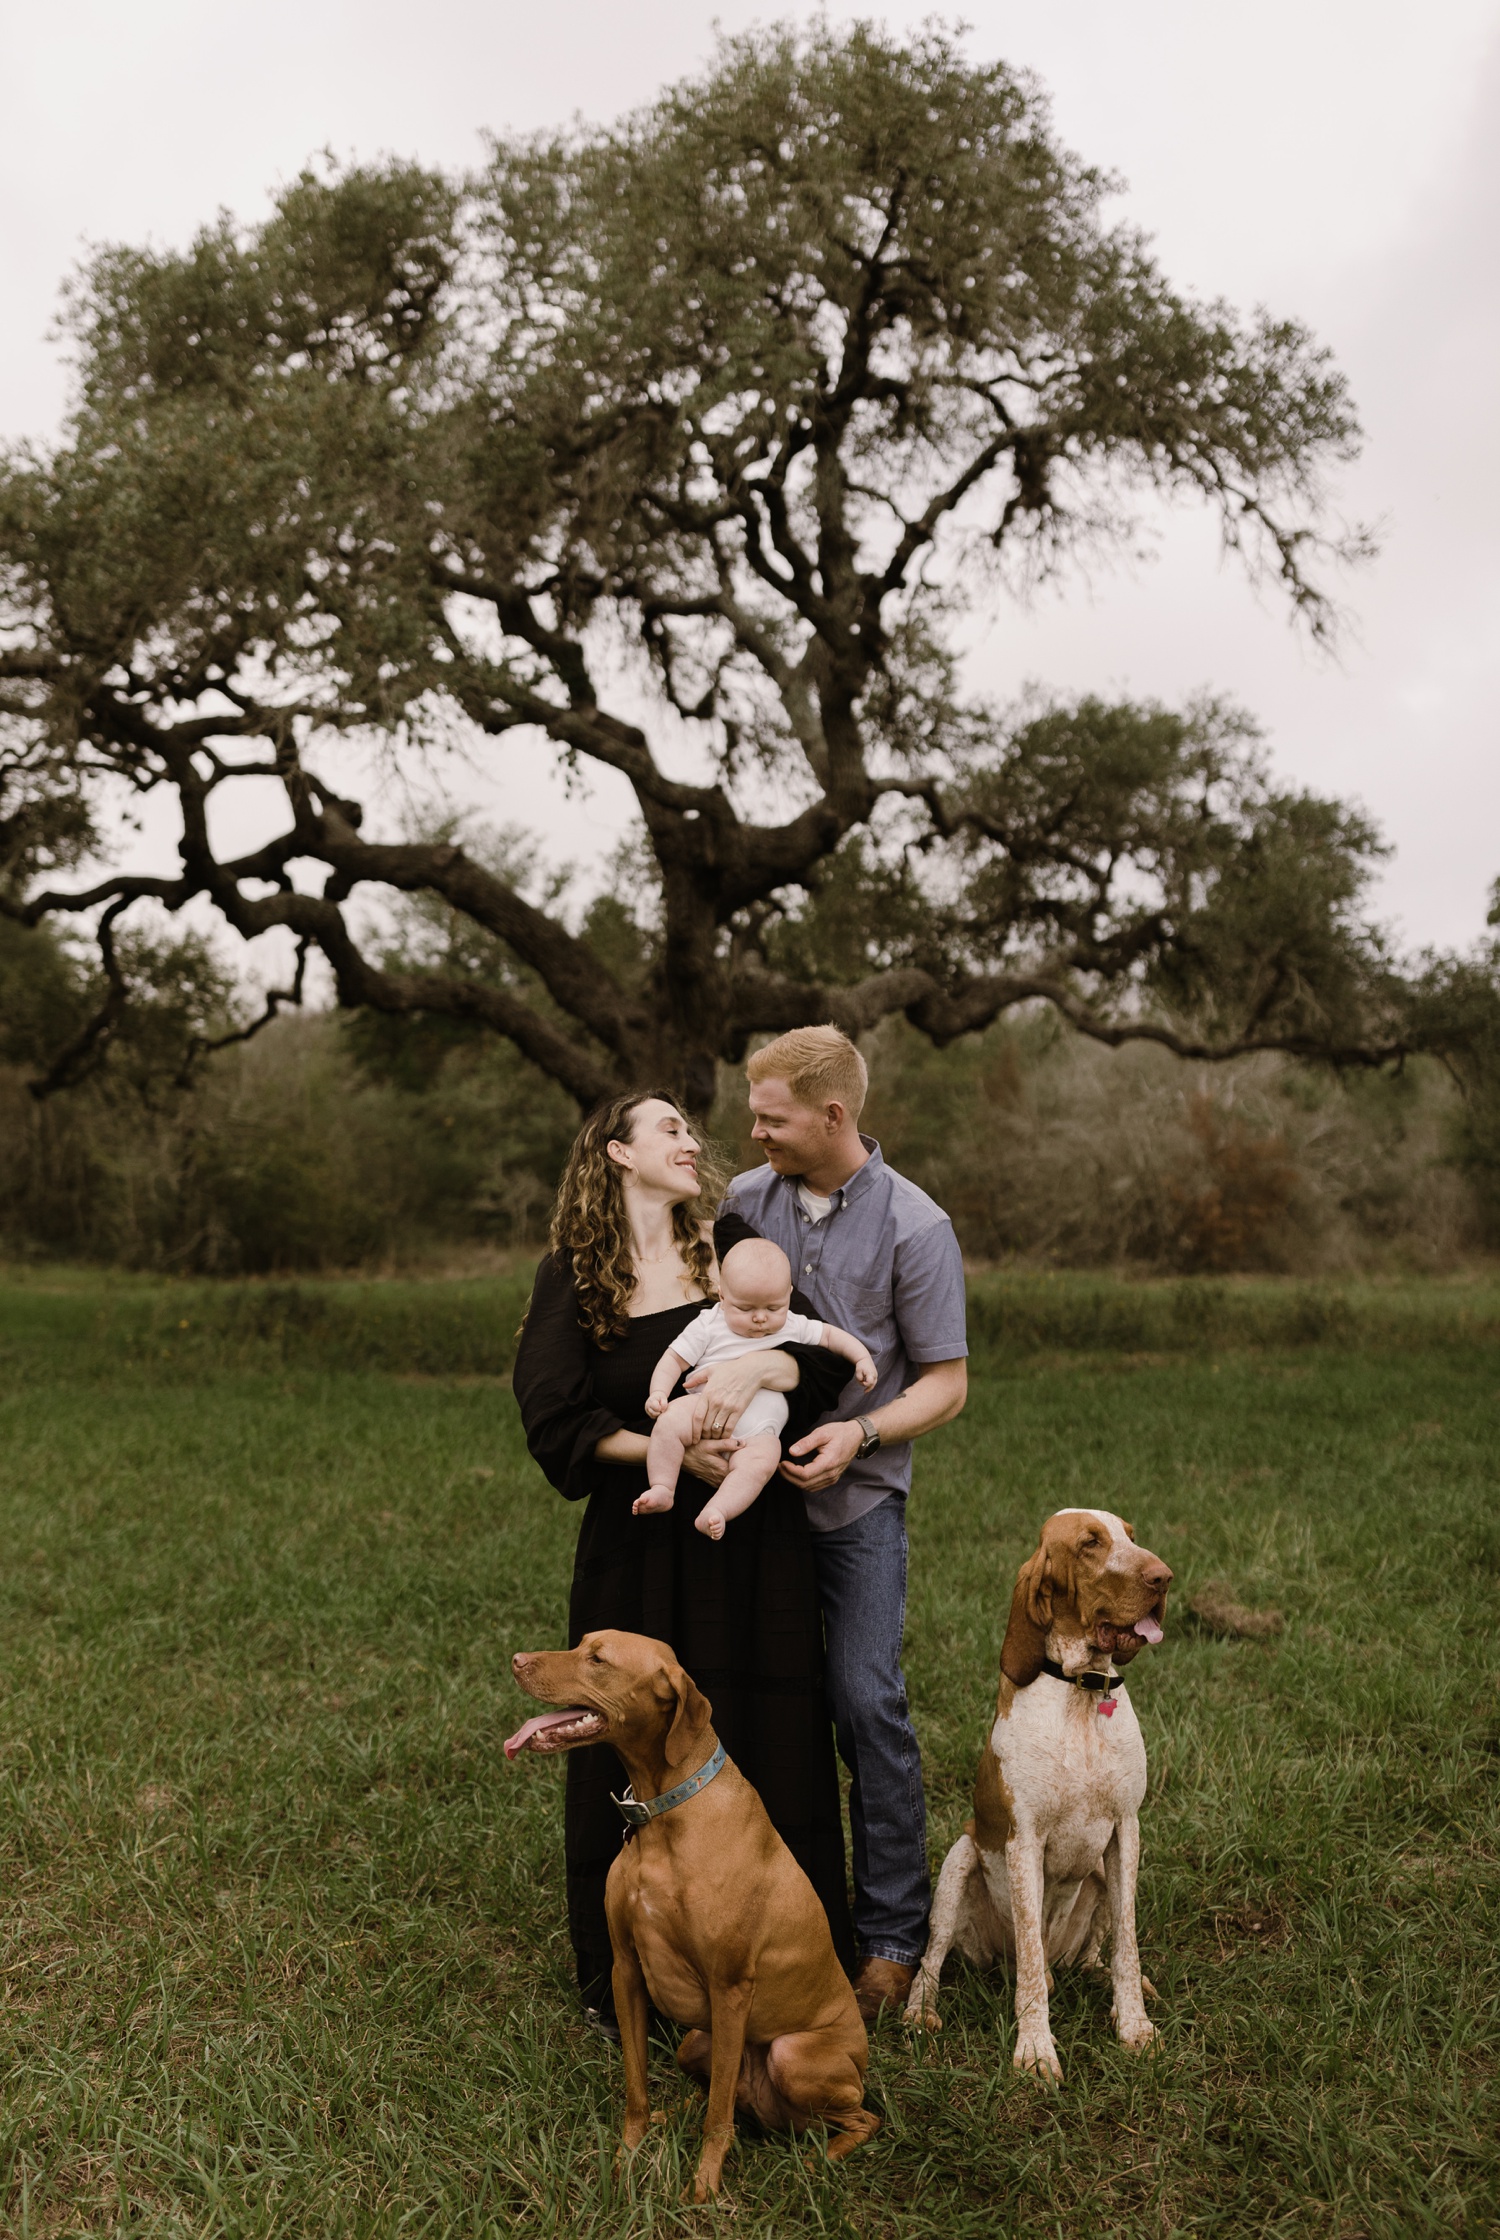 Amber Vickery - Austin Family & Lifestyle Photographer